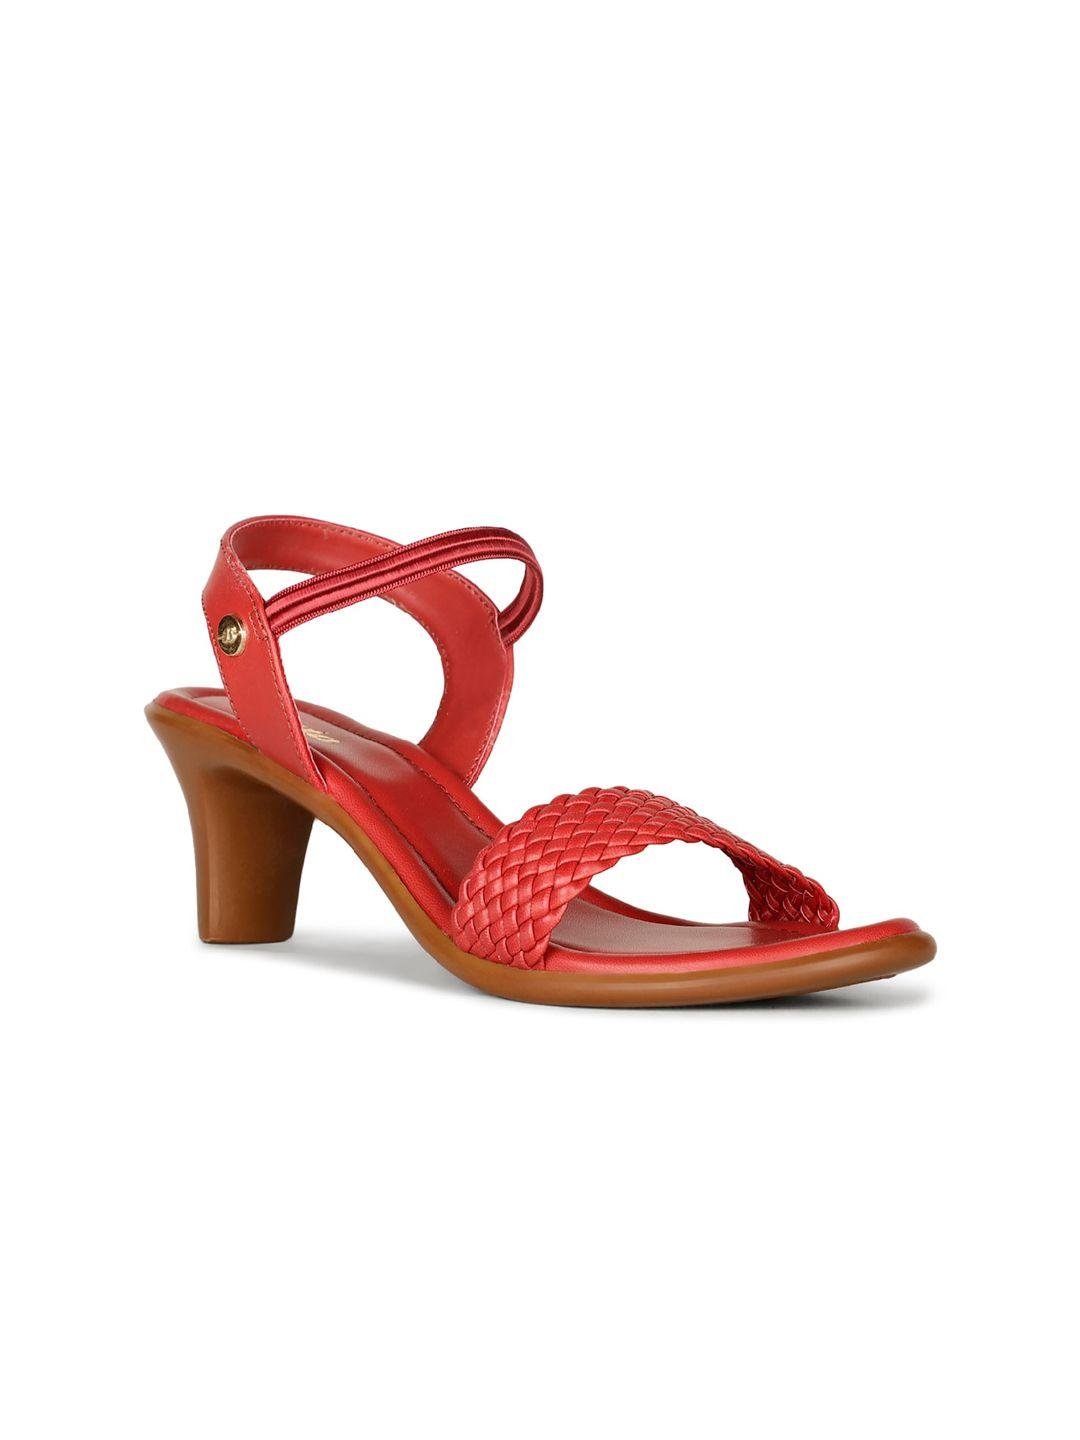 bata-braided-open-toe-block-heels-with-backstrap